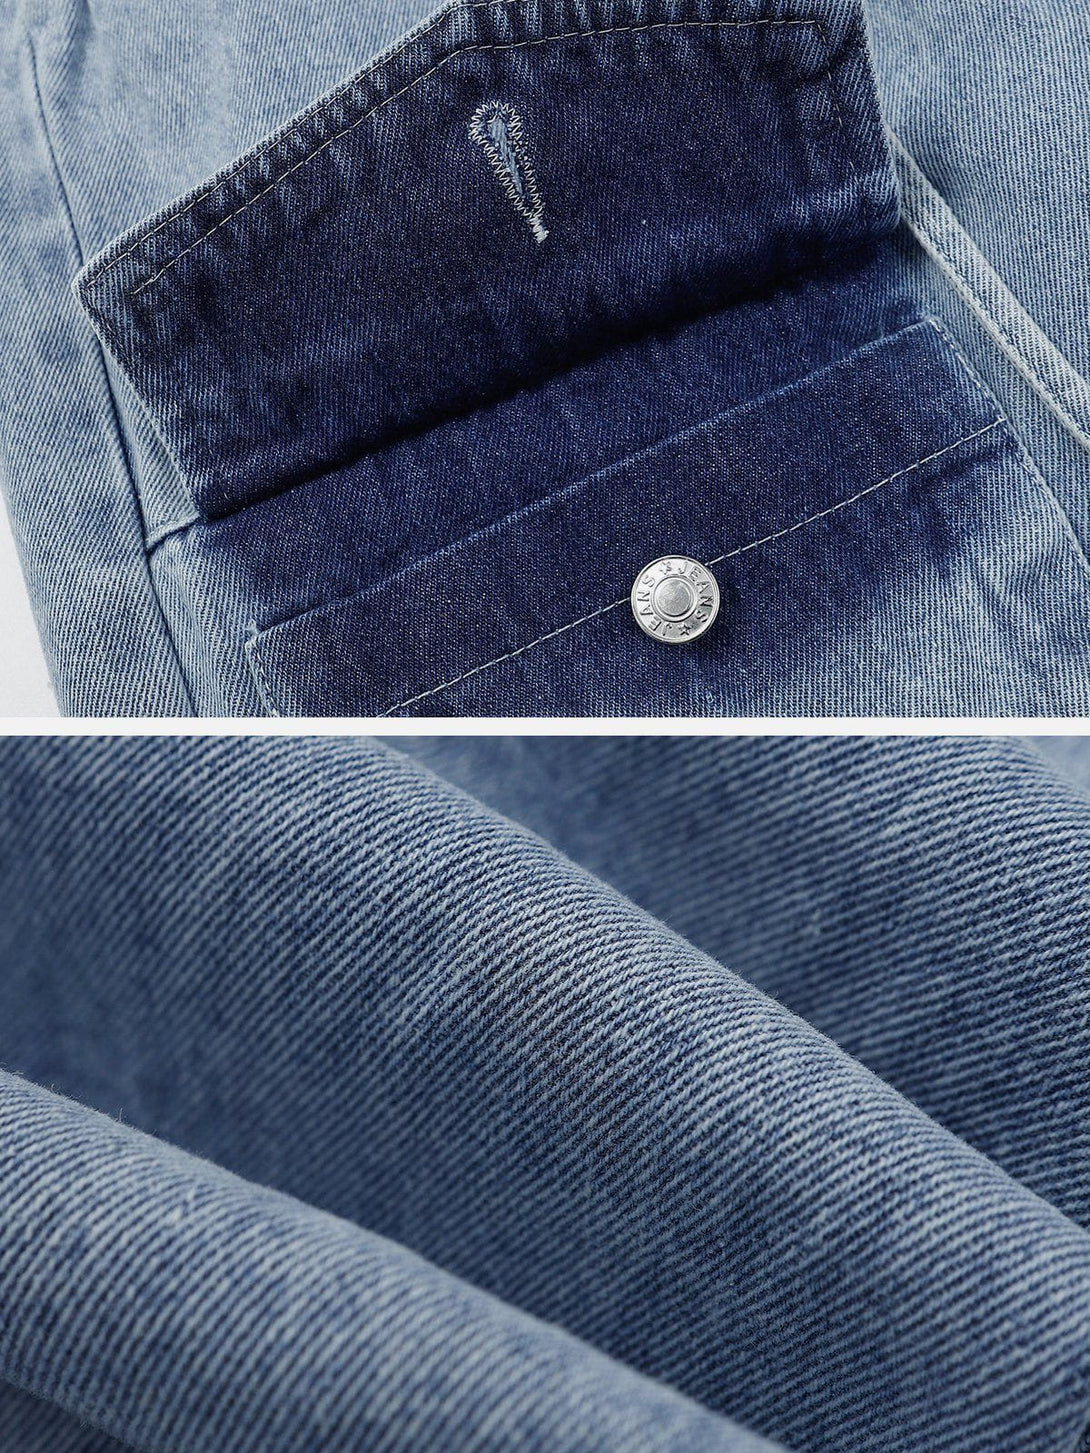 AlanBalen® - Multi Pocket Lace Up Jeans AlanBalen